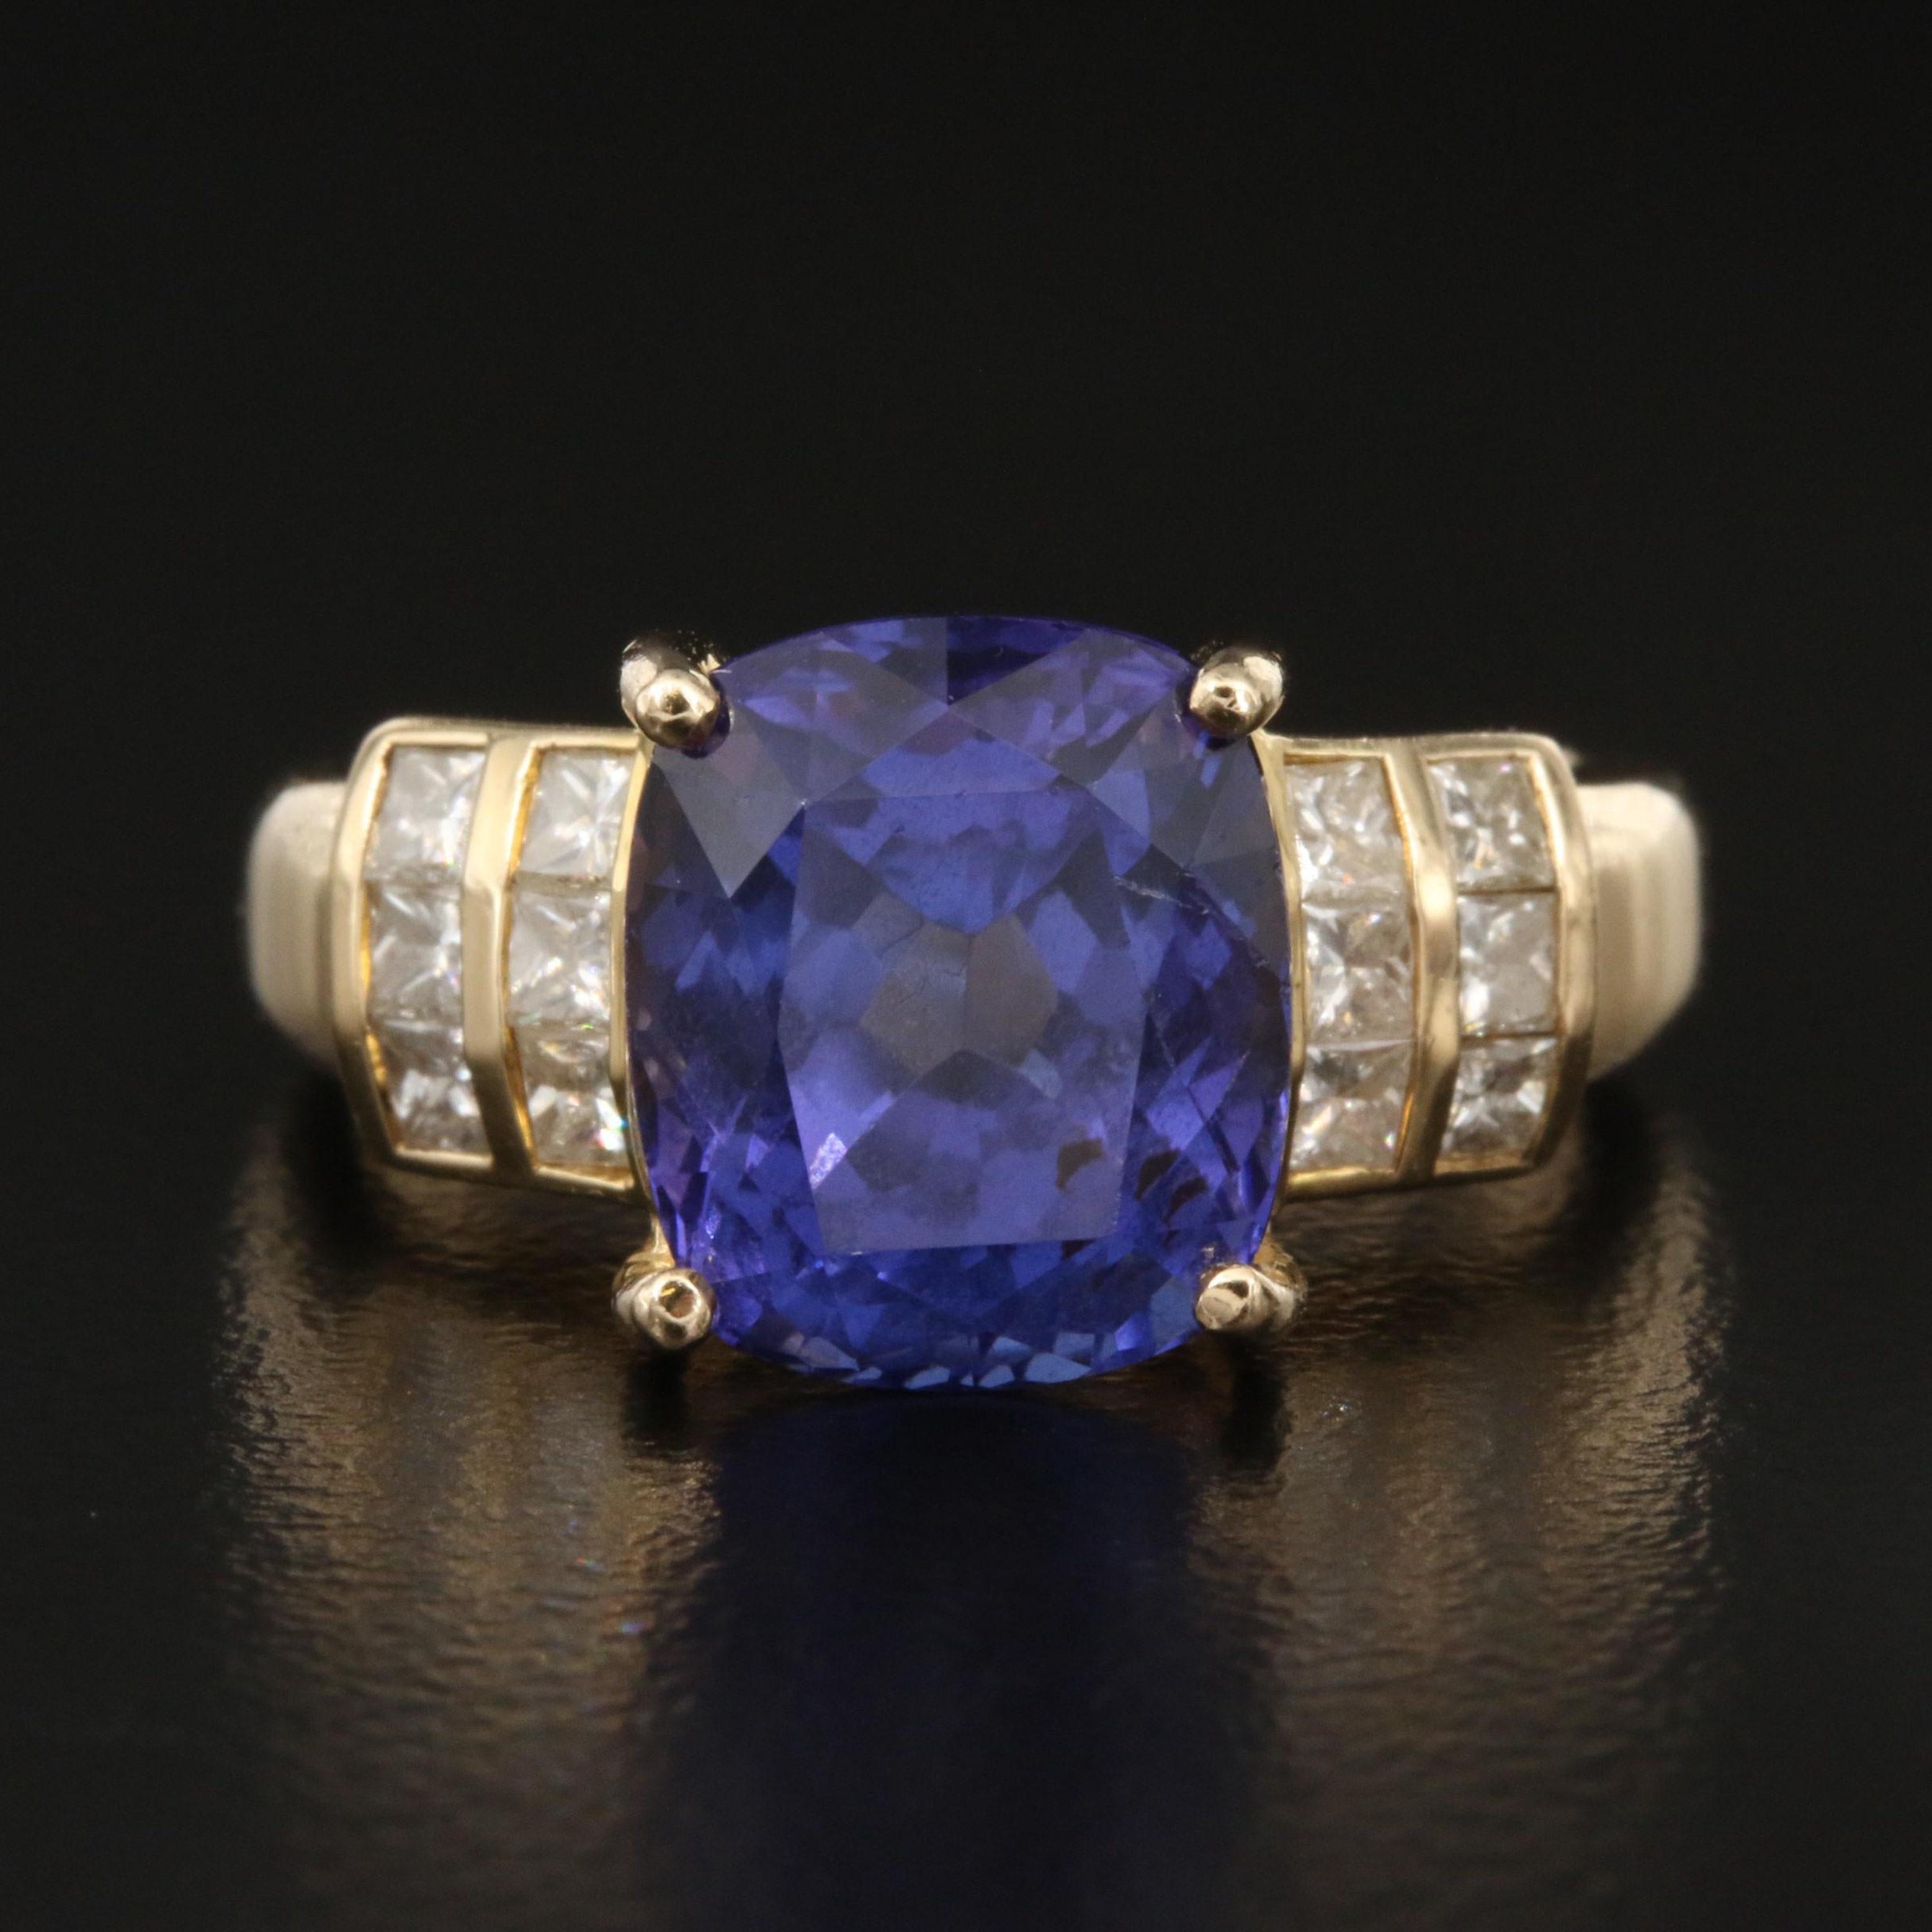 For Sale:  5 Carat Cushion Cut Tanzanite Engagement Ring, Yellow Gold Diamond Wedding Ring 5